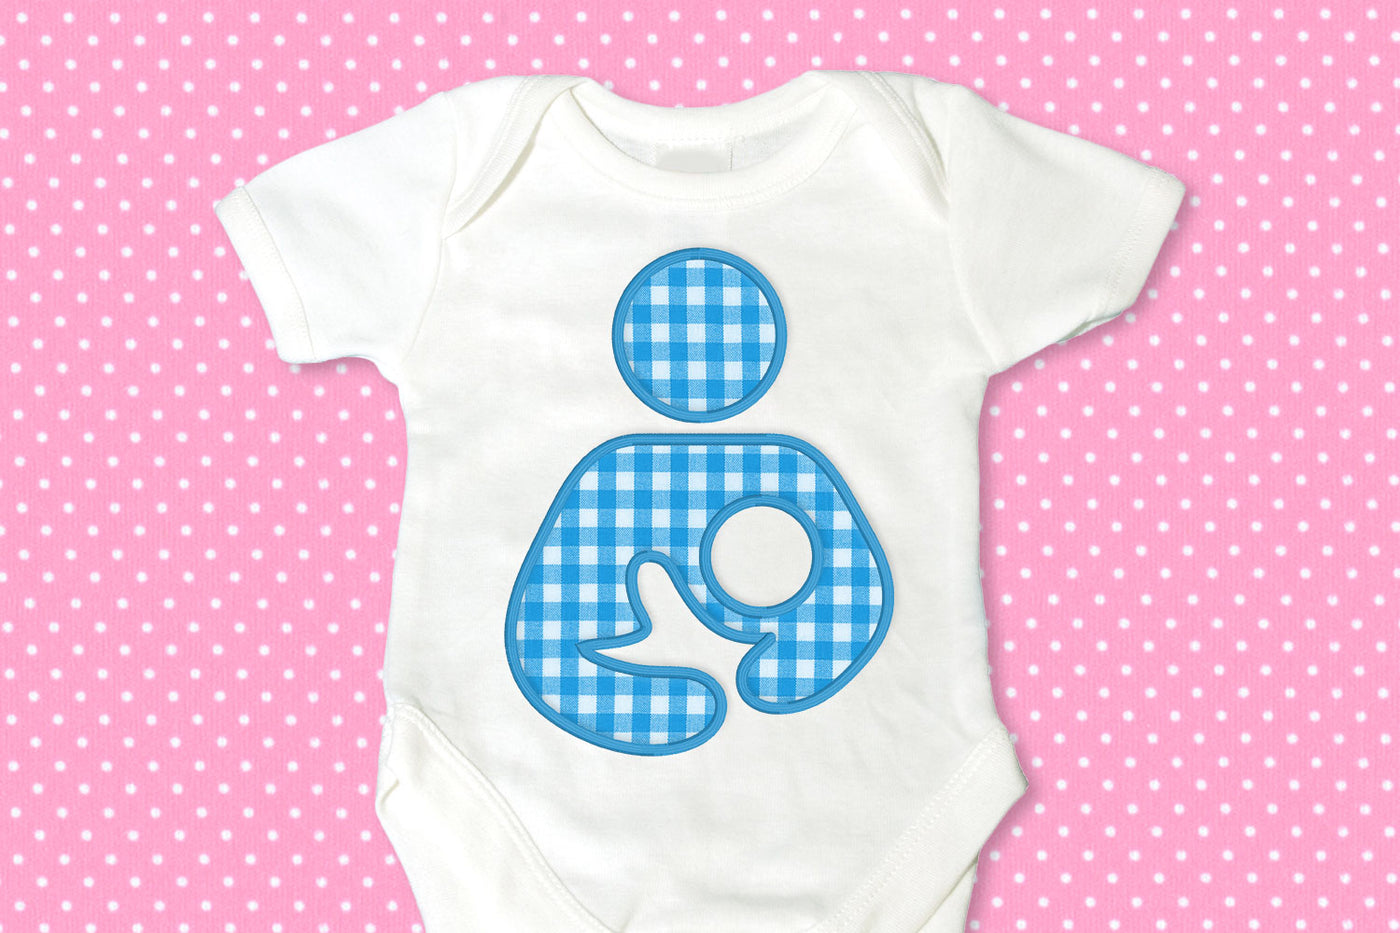 Breastfeeding Icon Applique Embroidery